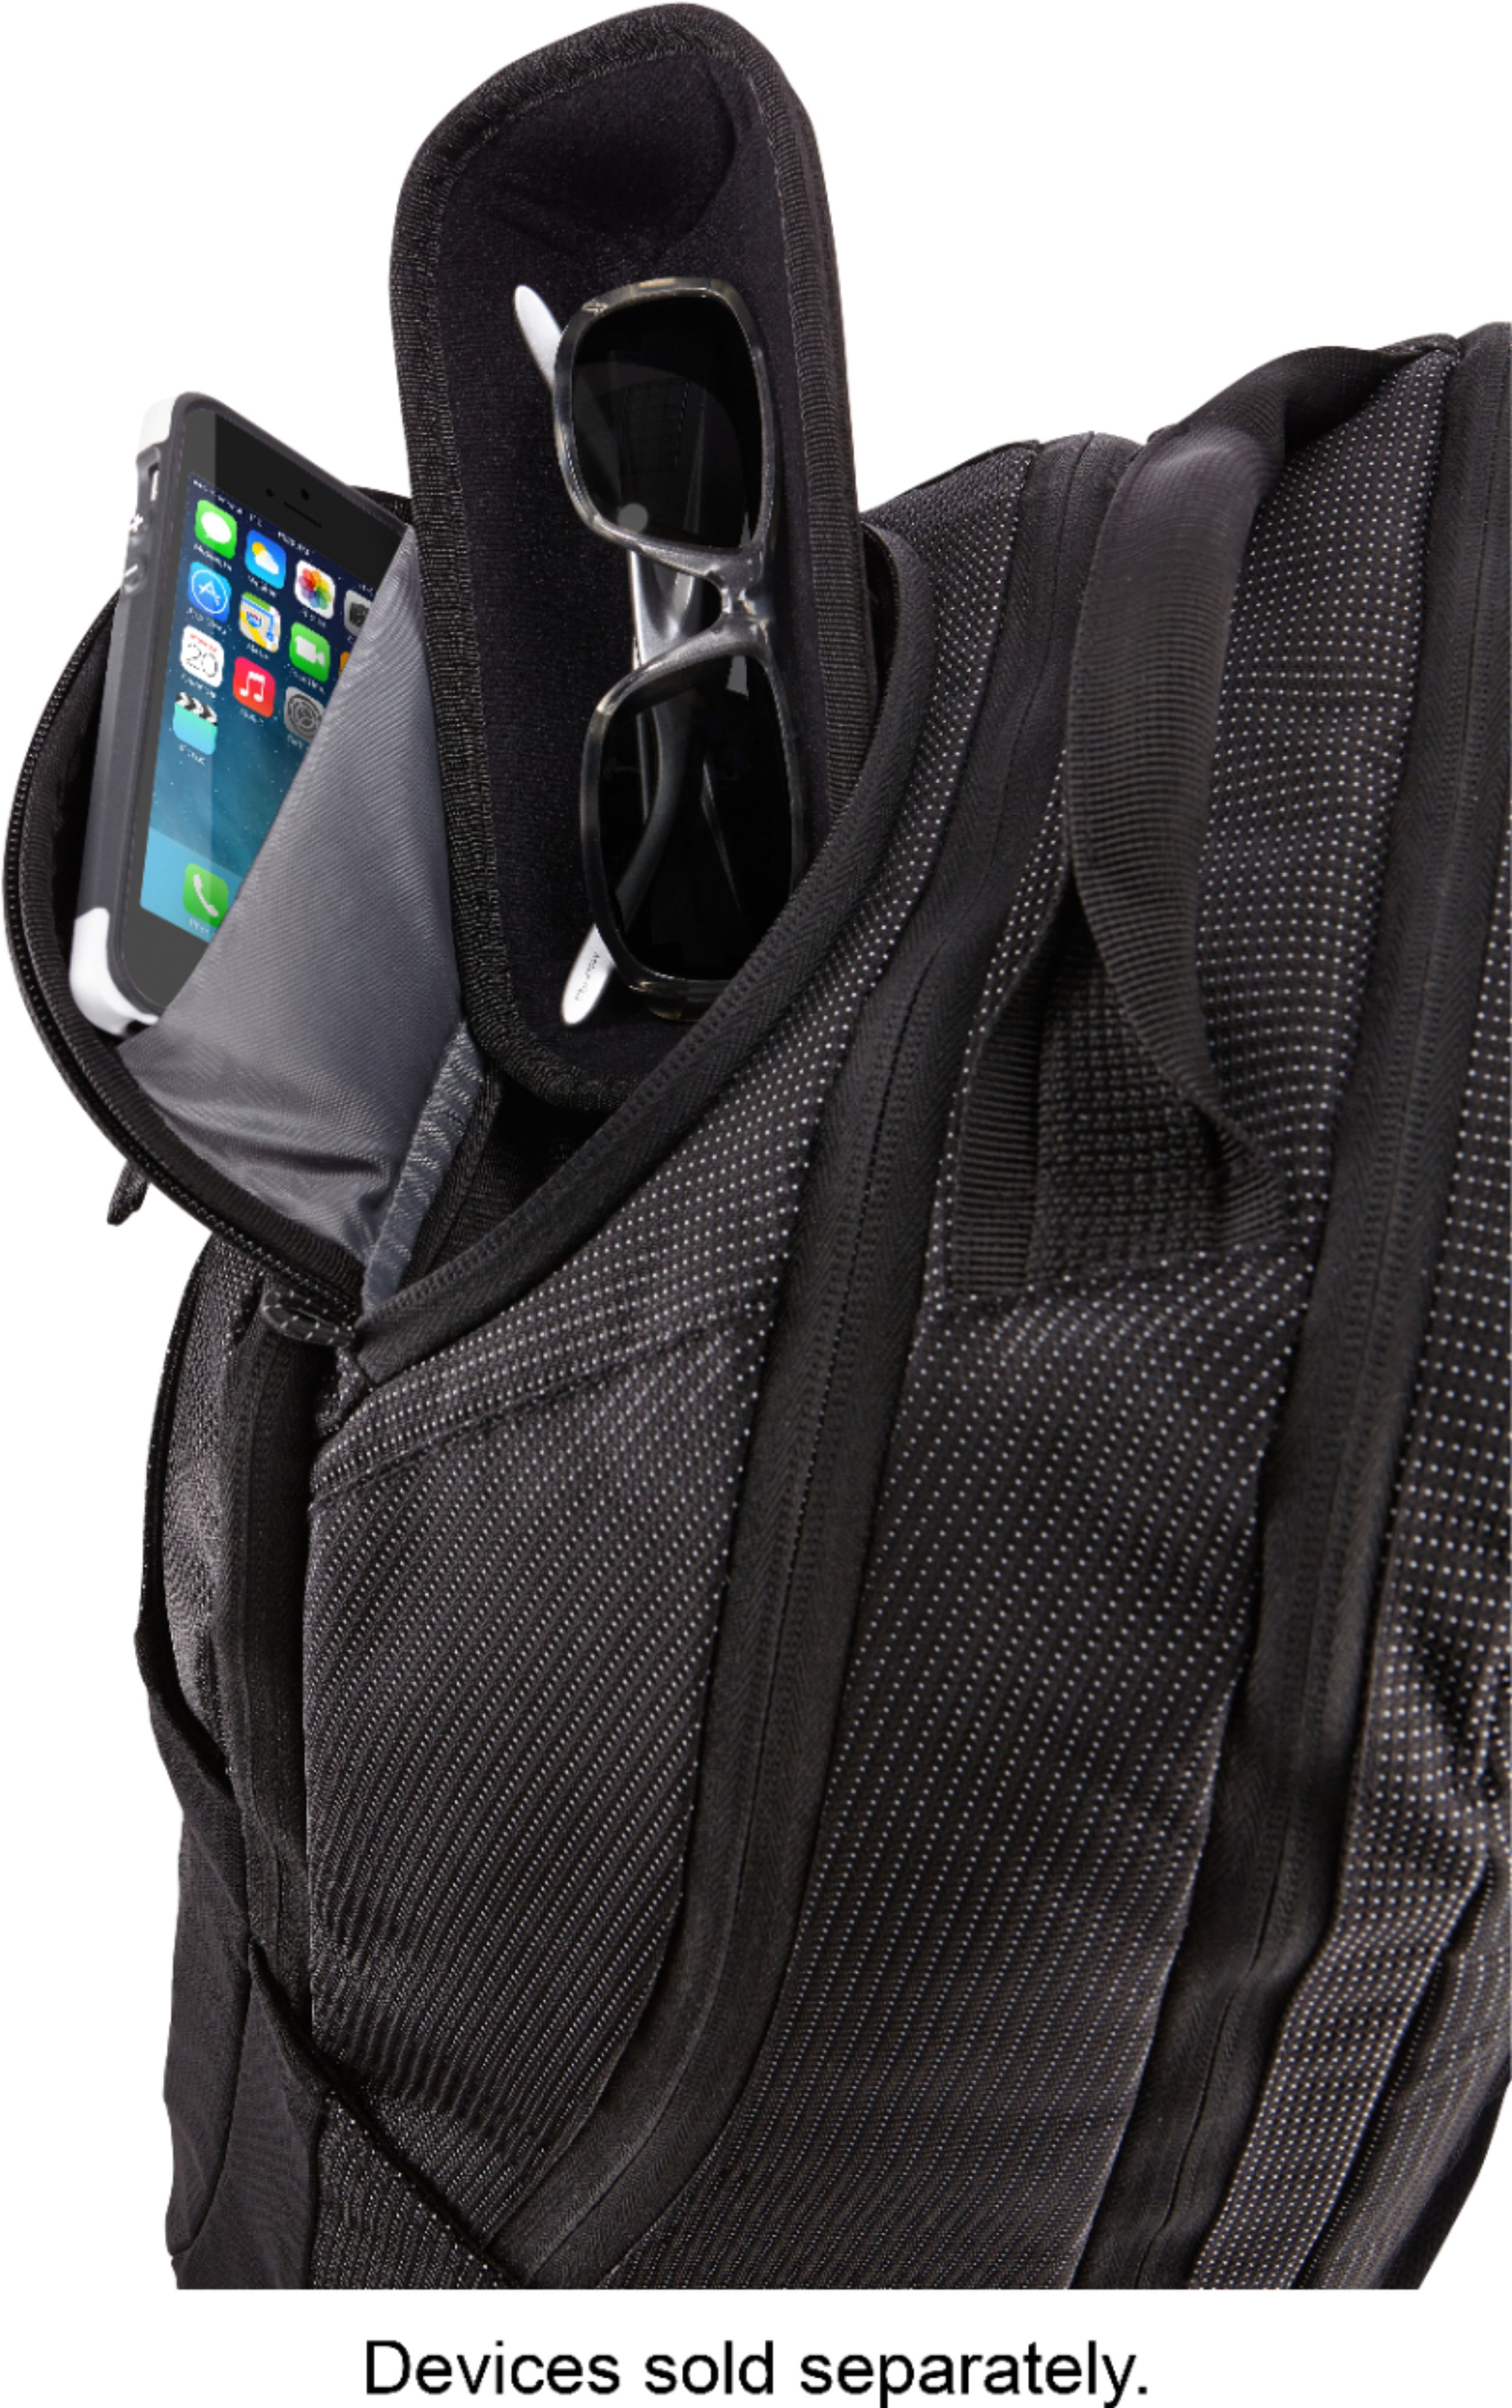 The Row Alligator Backpack - Backpacks, Handbags - THR01316